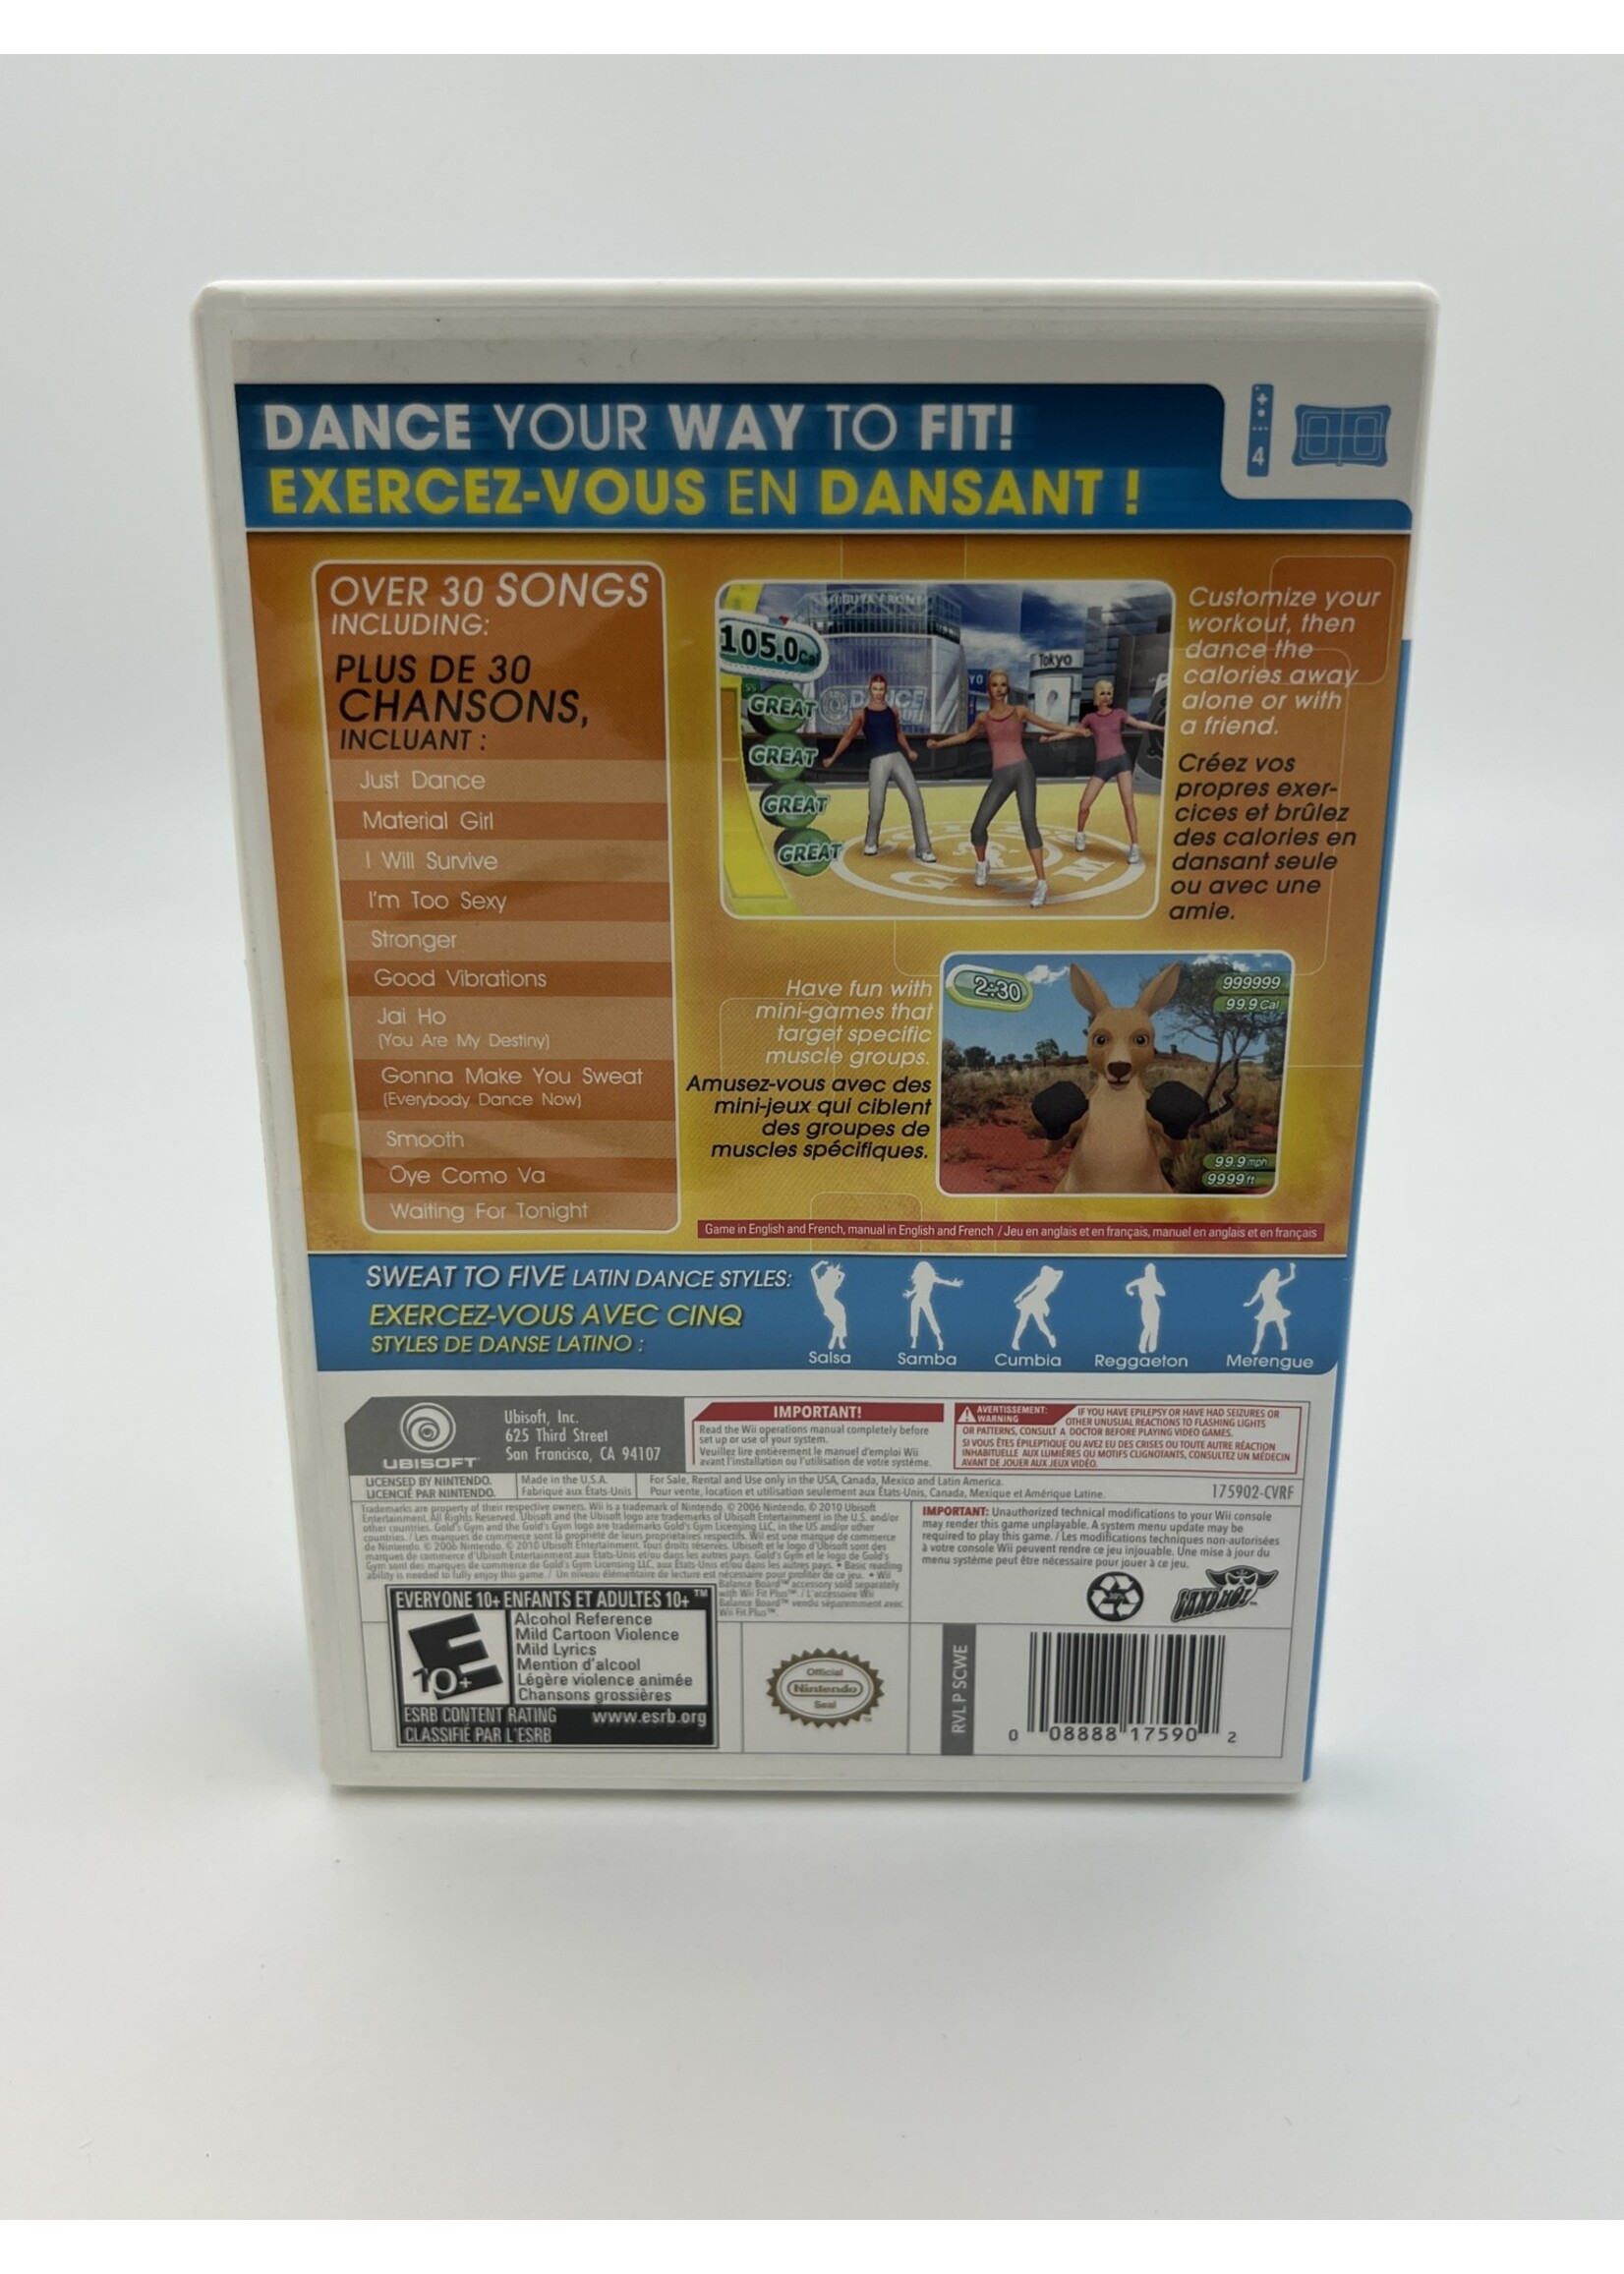 Nintendo Golds Gym Dance Workout Wii